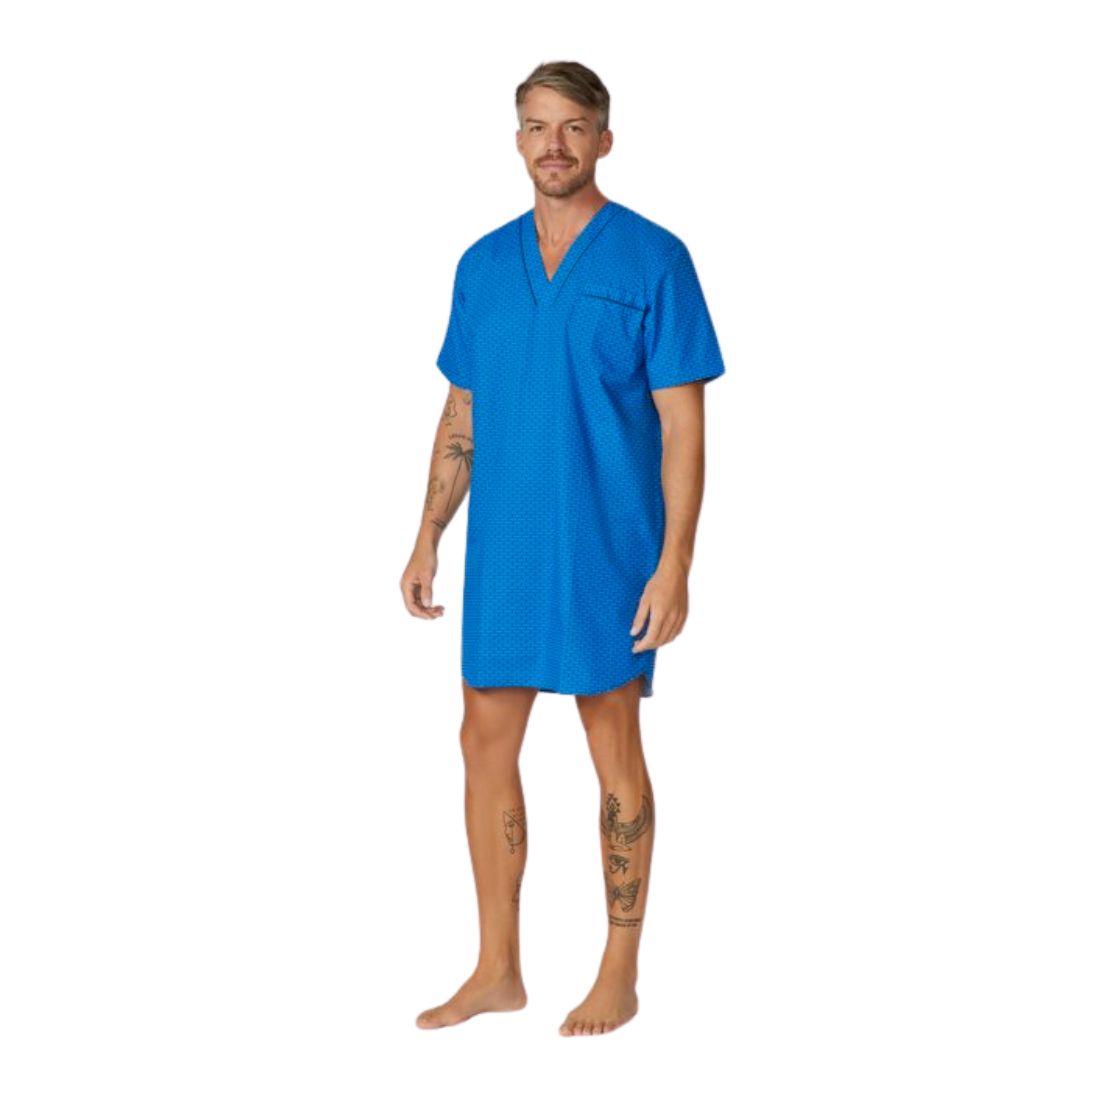 Contare Cotton Rich Night Shirt 3XL Blues Assorted Mens Sleepwear by Lynx | The Bloke Shop